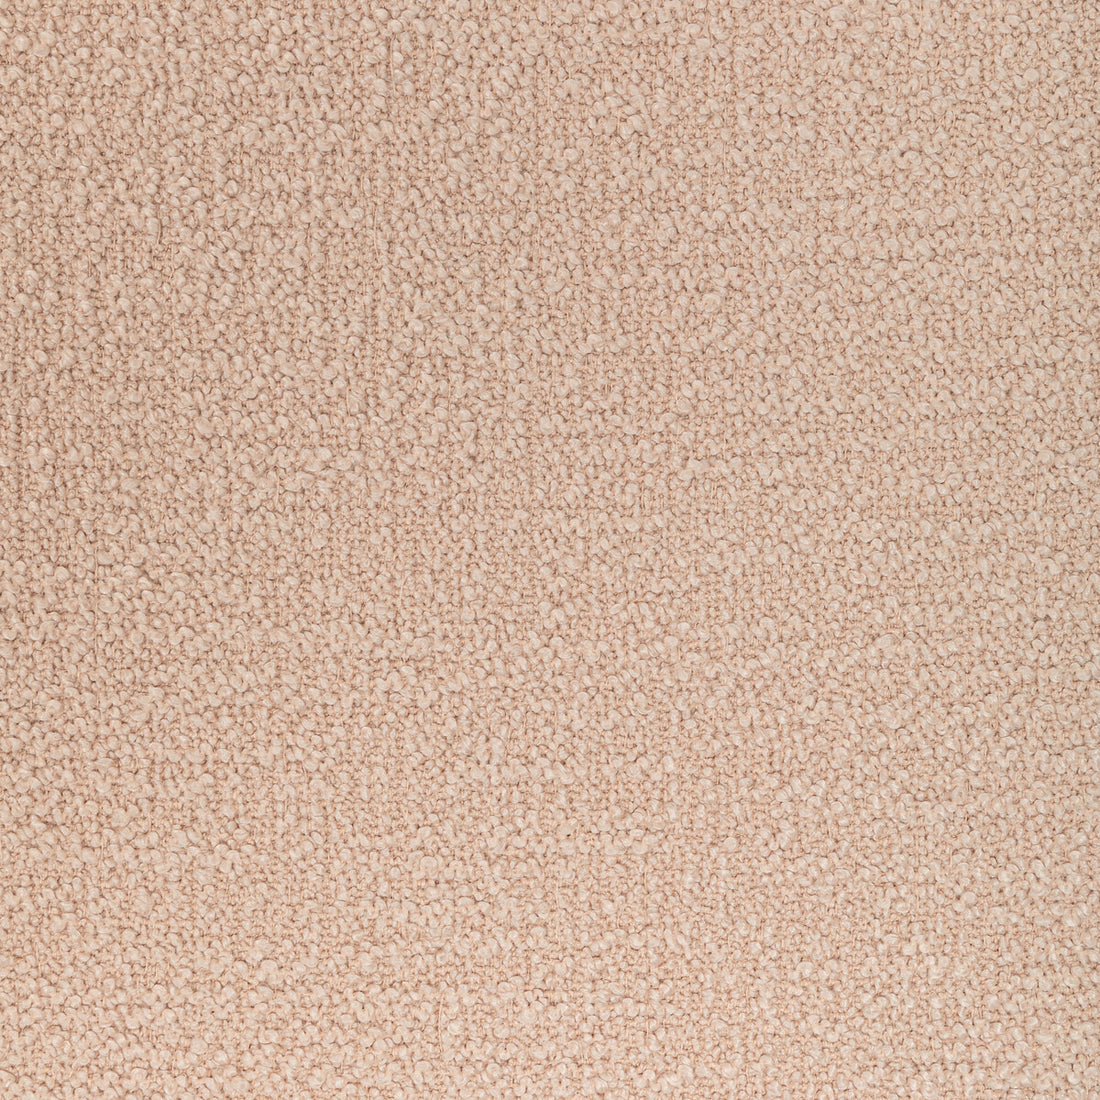 Kravet Smart fabric in 36857-7 color - pattern 36857.7.0 - by Kravet Smart in the Performance Kravetarmor collection